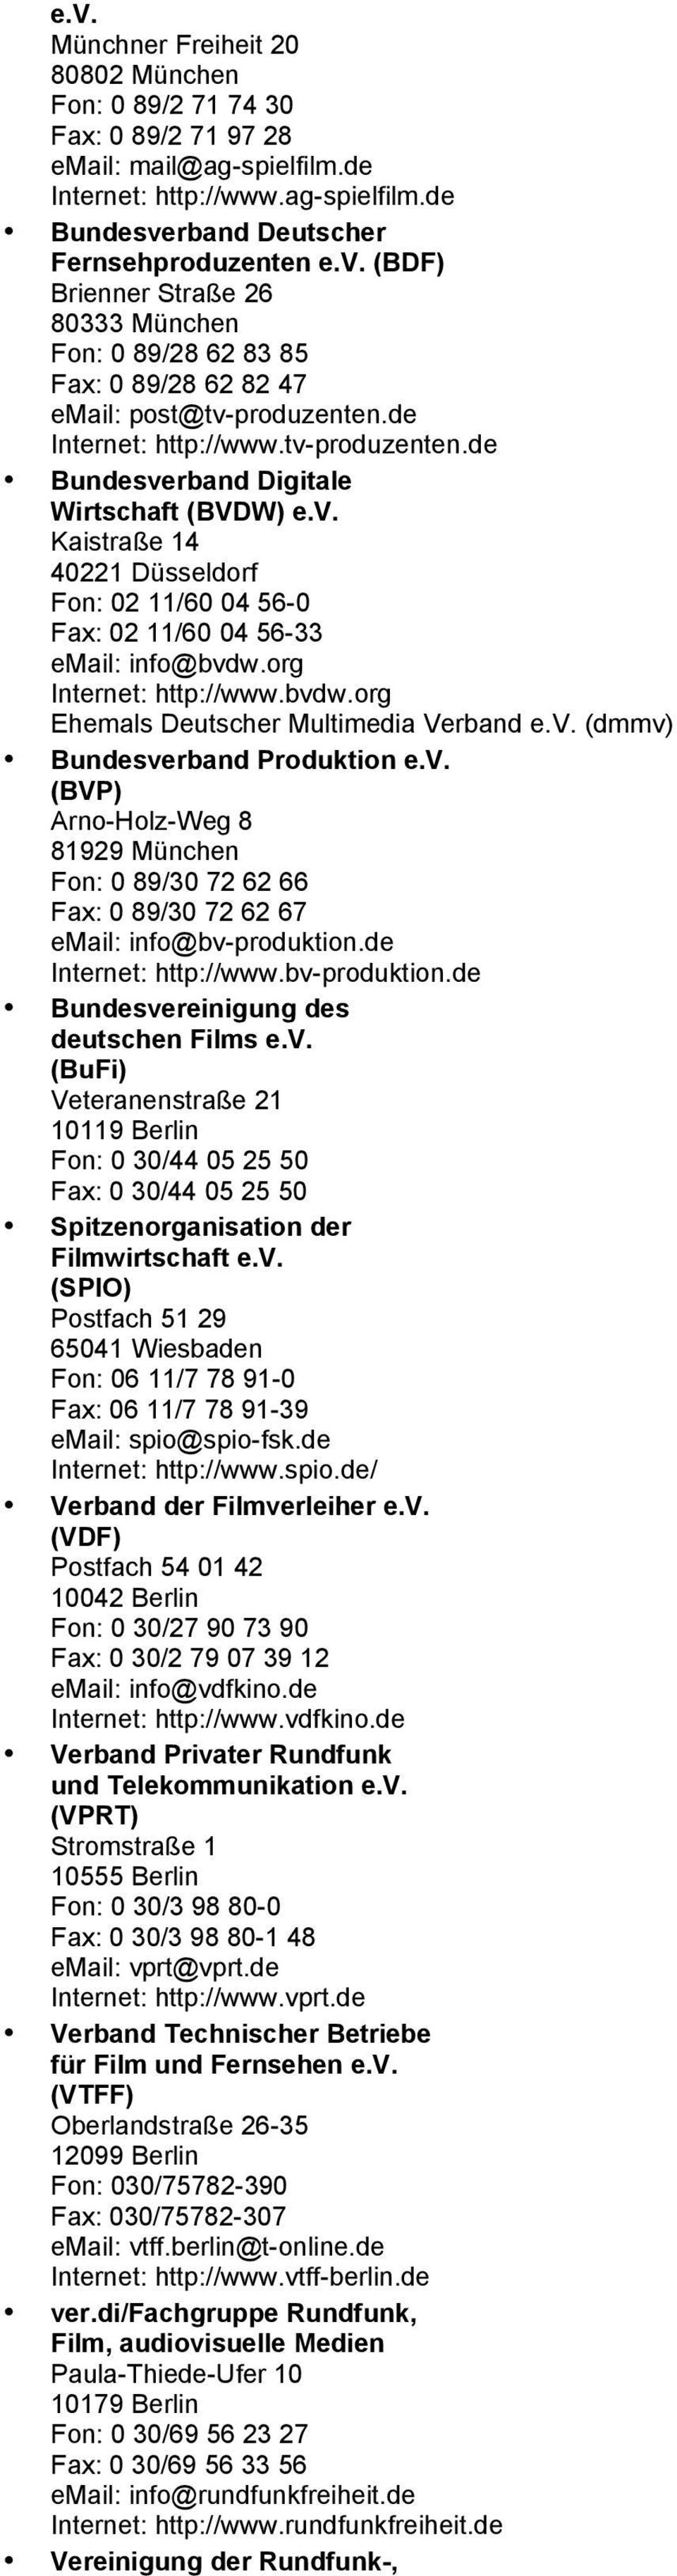 org : http://www.bvdw.org Ehemals Deutscher Multimedia Verband e.v. (dmmv) Bundesverband Produktion e.v. (BVP) Arno-Holz-Weg 8 81929 München Fon: 0 89/30 72 62 66 Fax: 0 89/30 72 62 67 email: info@bv-produktion.